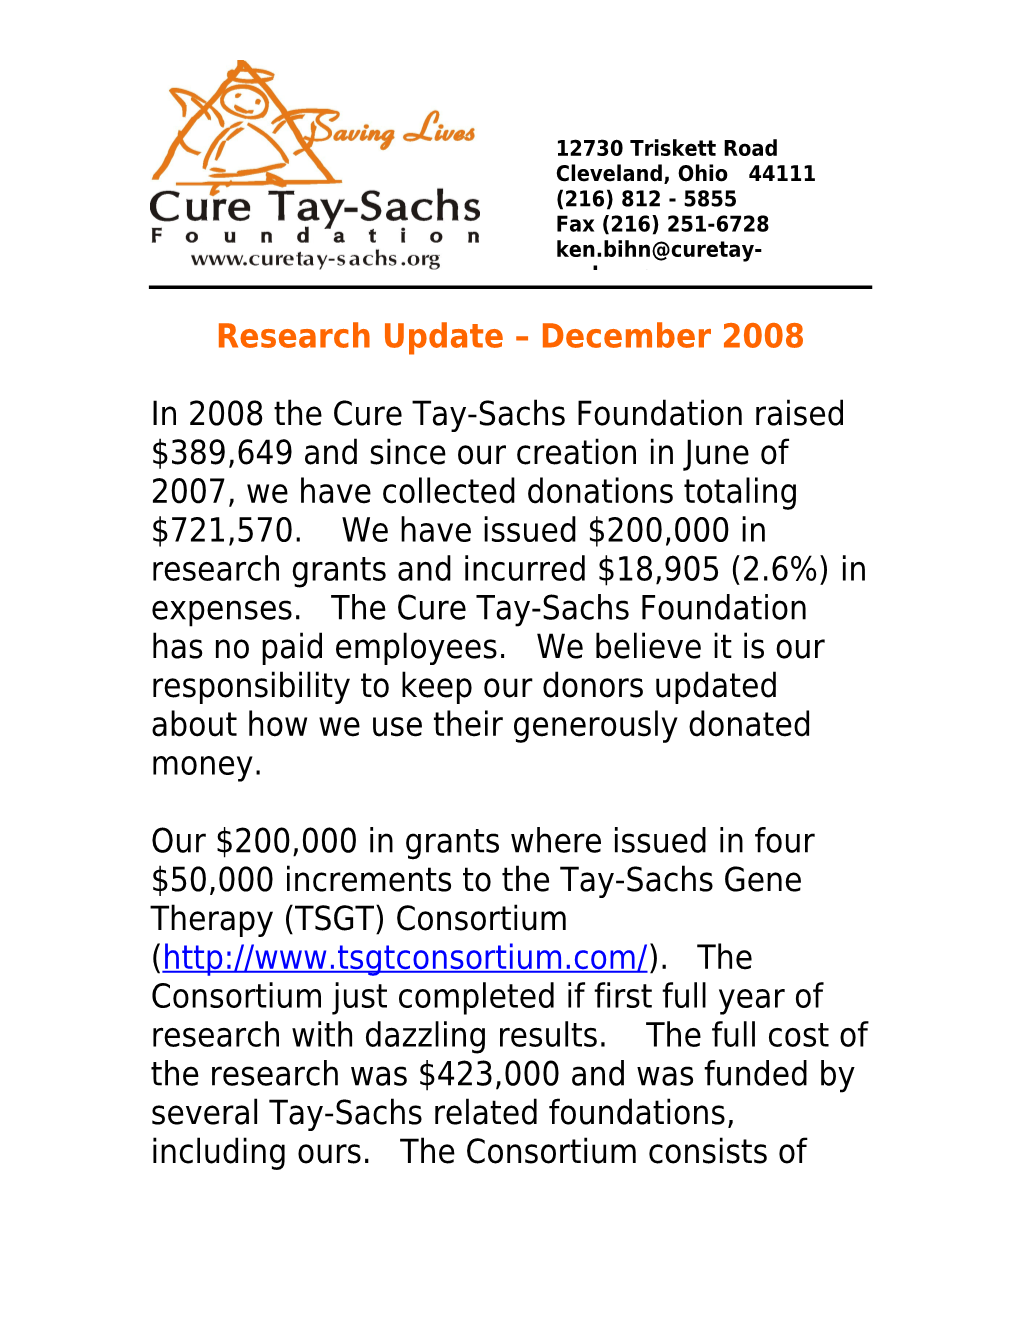 Research Update December2008